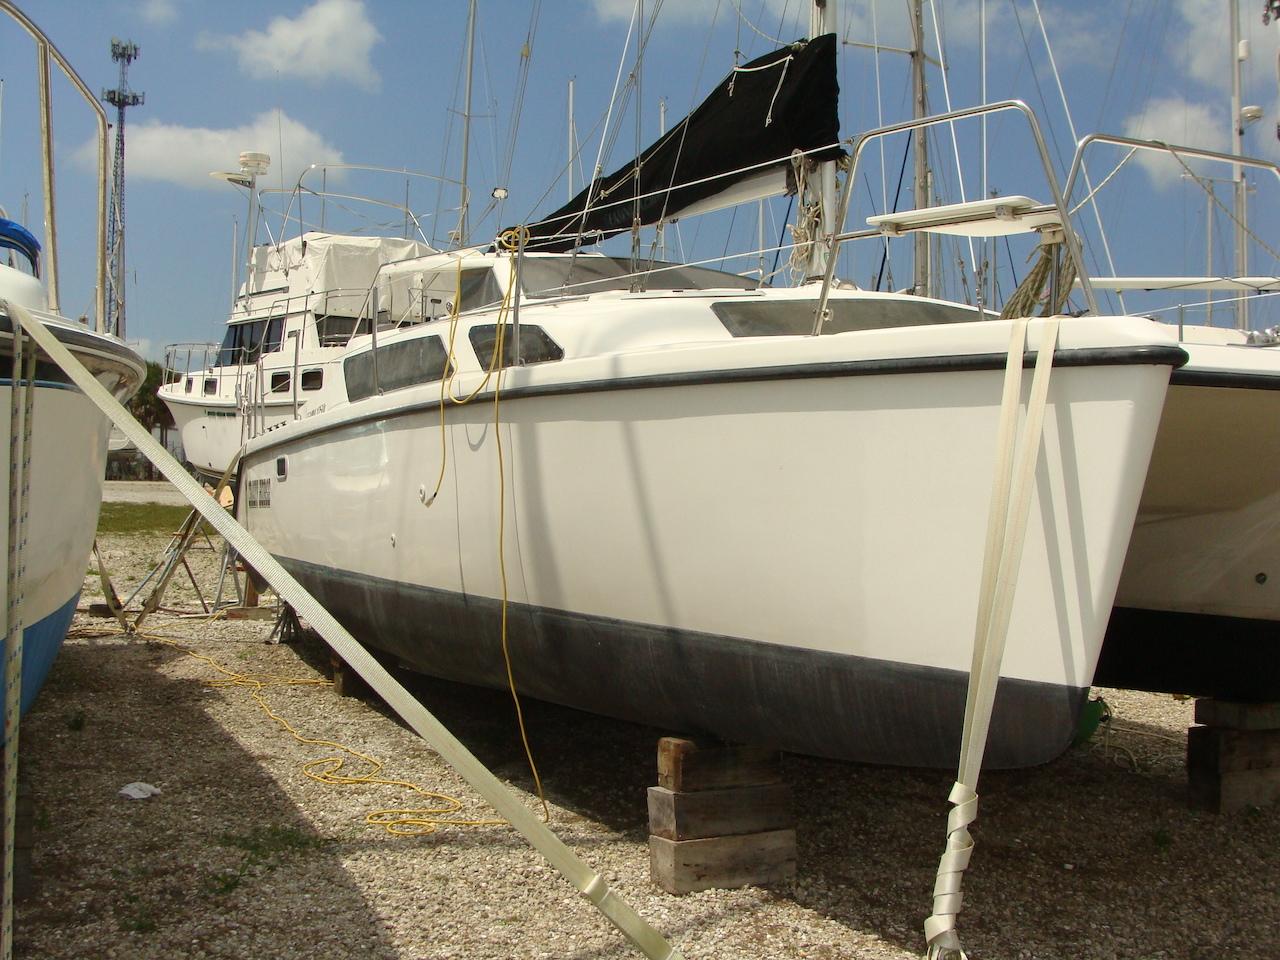 2010 Gemini 105 MC, Port Charlotte Florida - boats.com